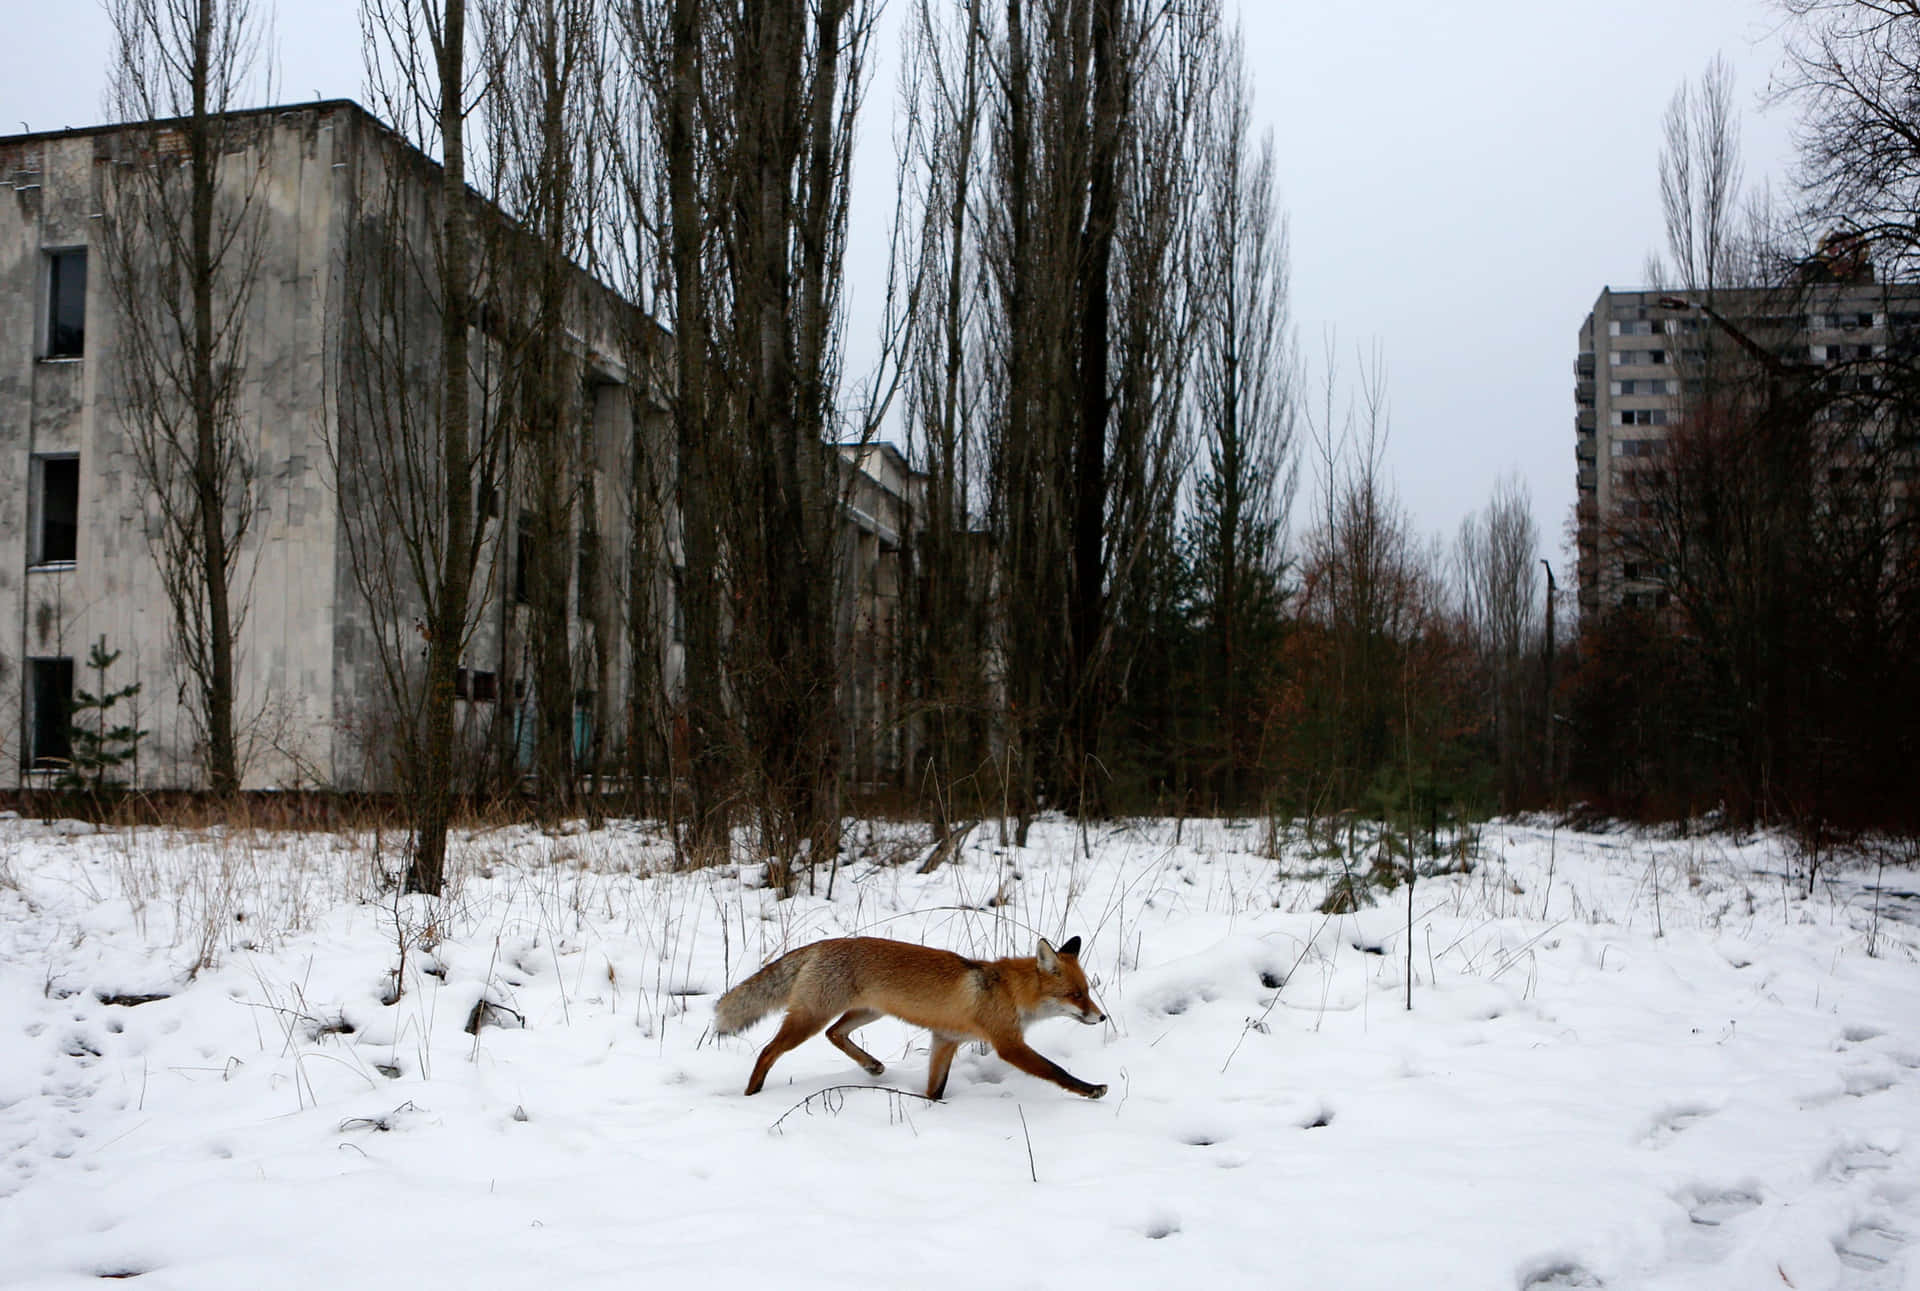 A Fox Walks Through A Snowy Field Near Buildings